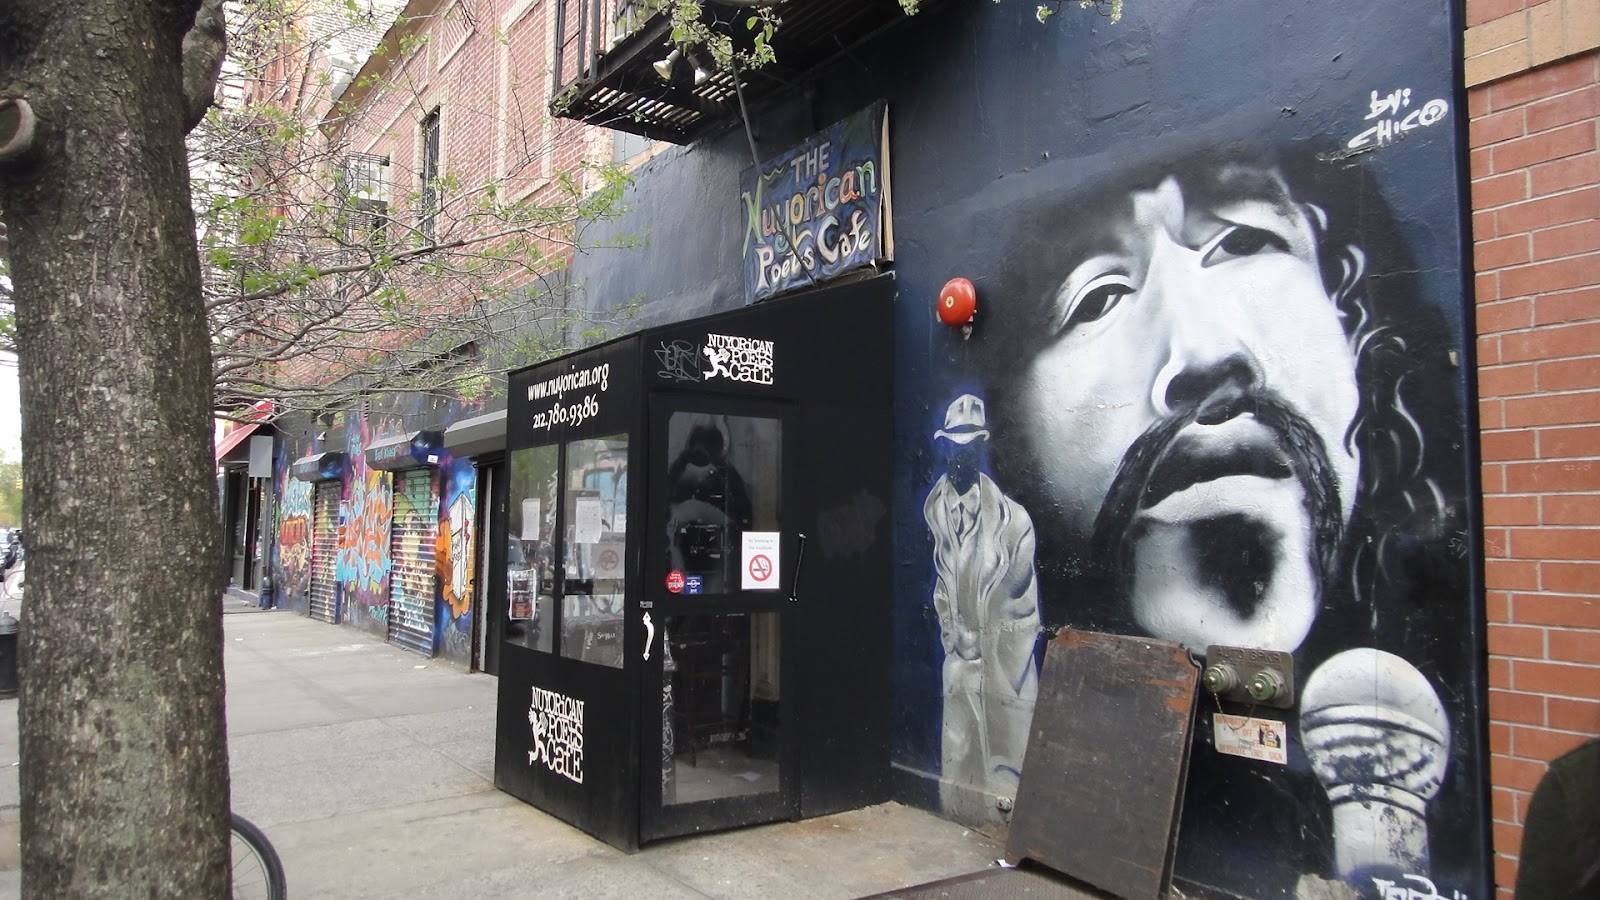 Nuyorican Poets Cafe